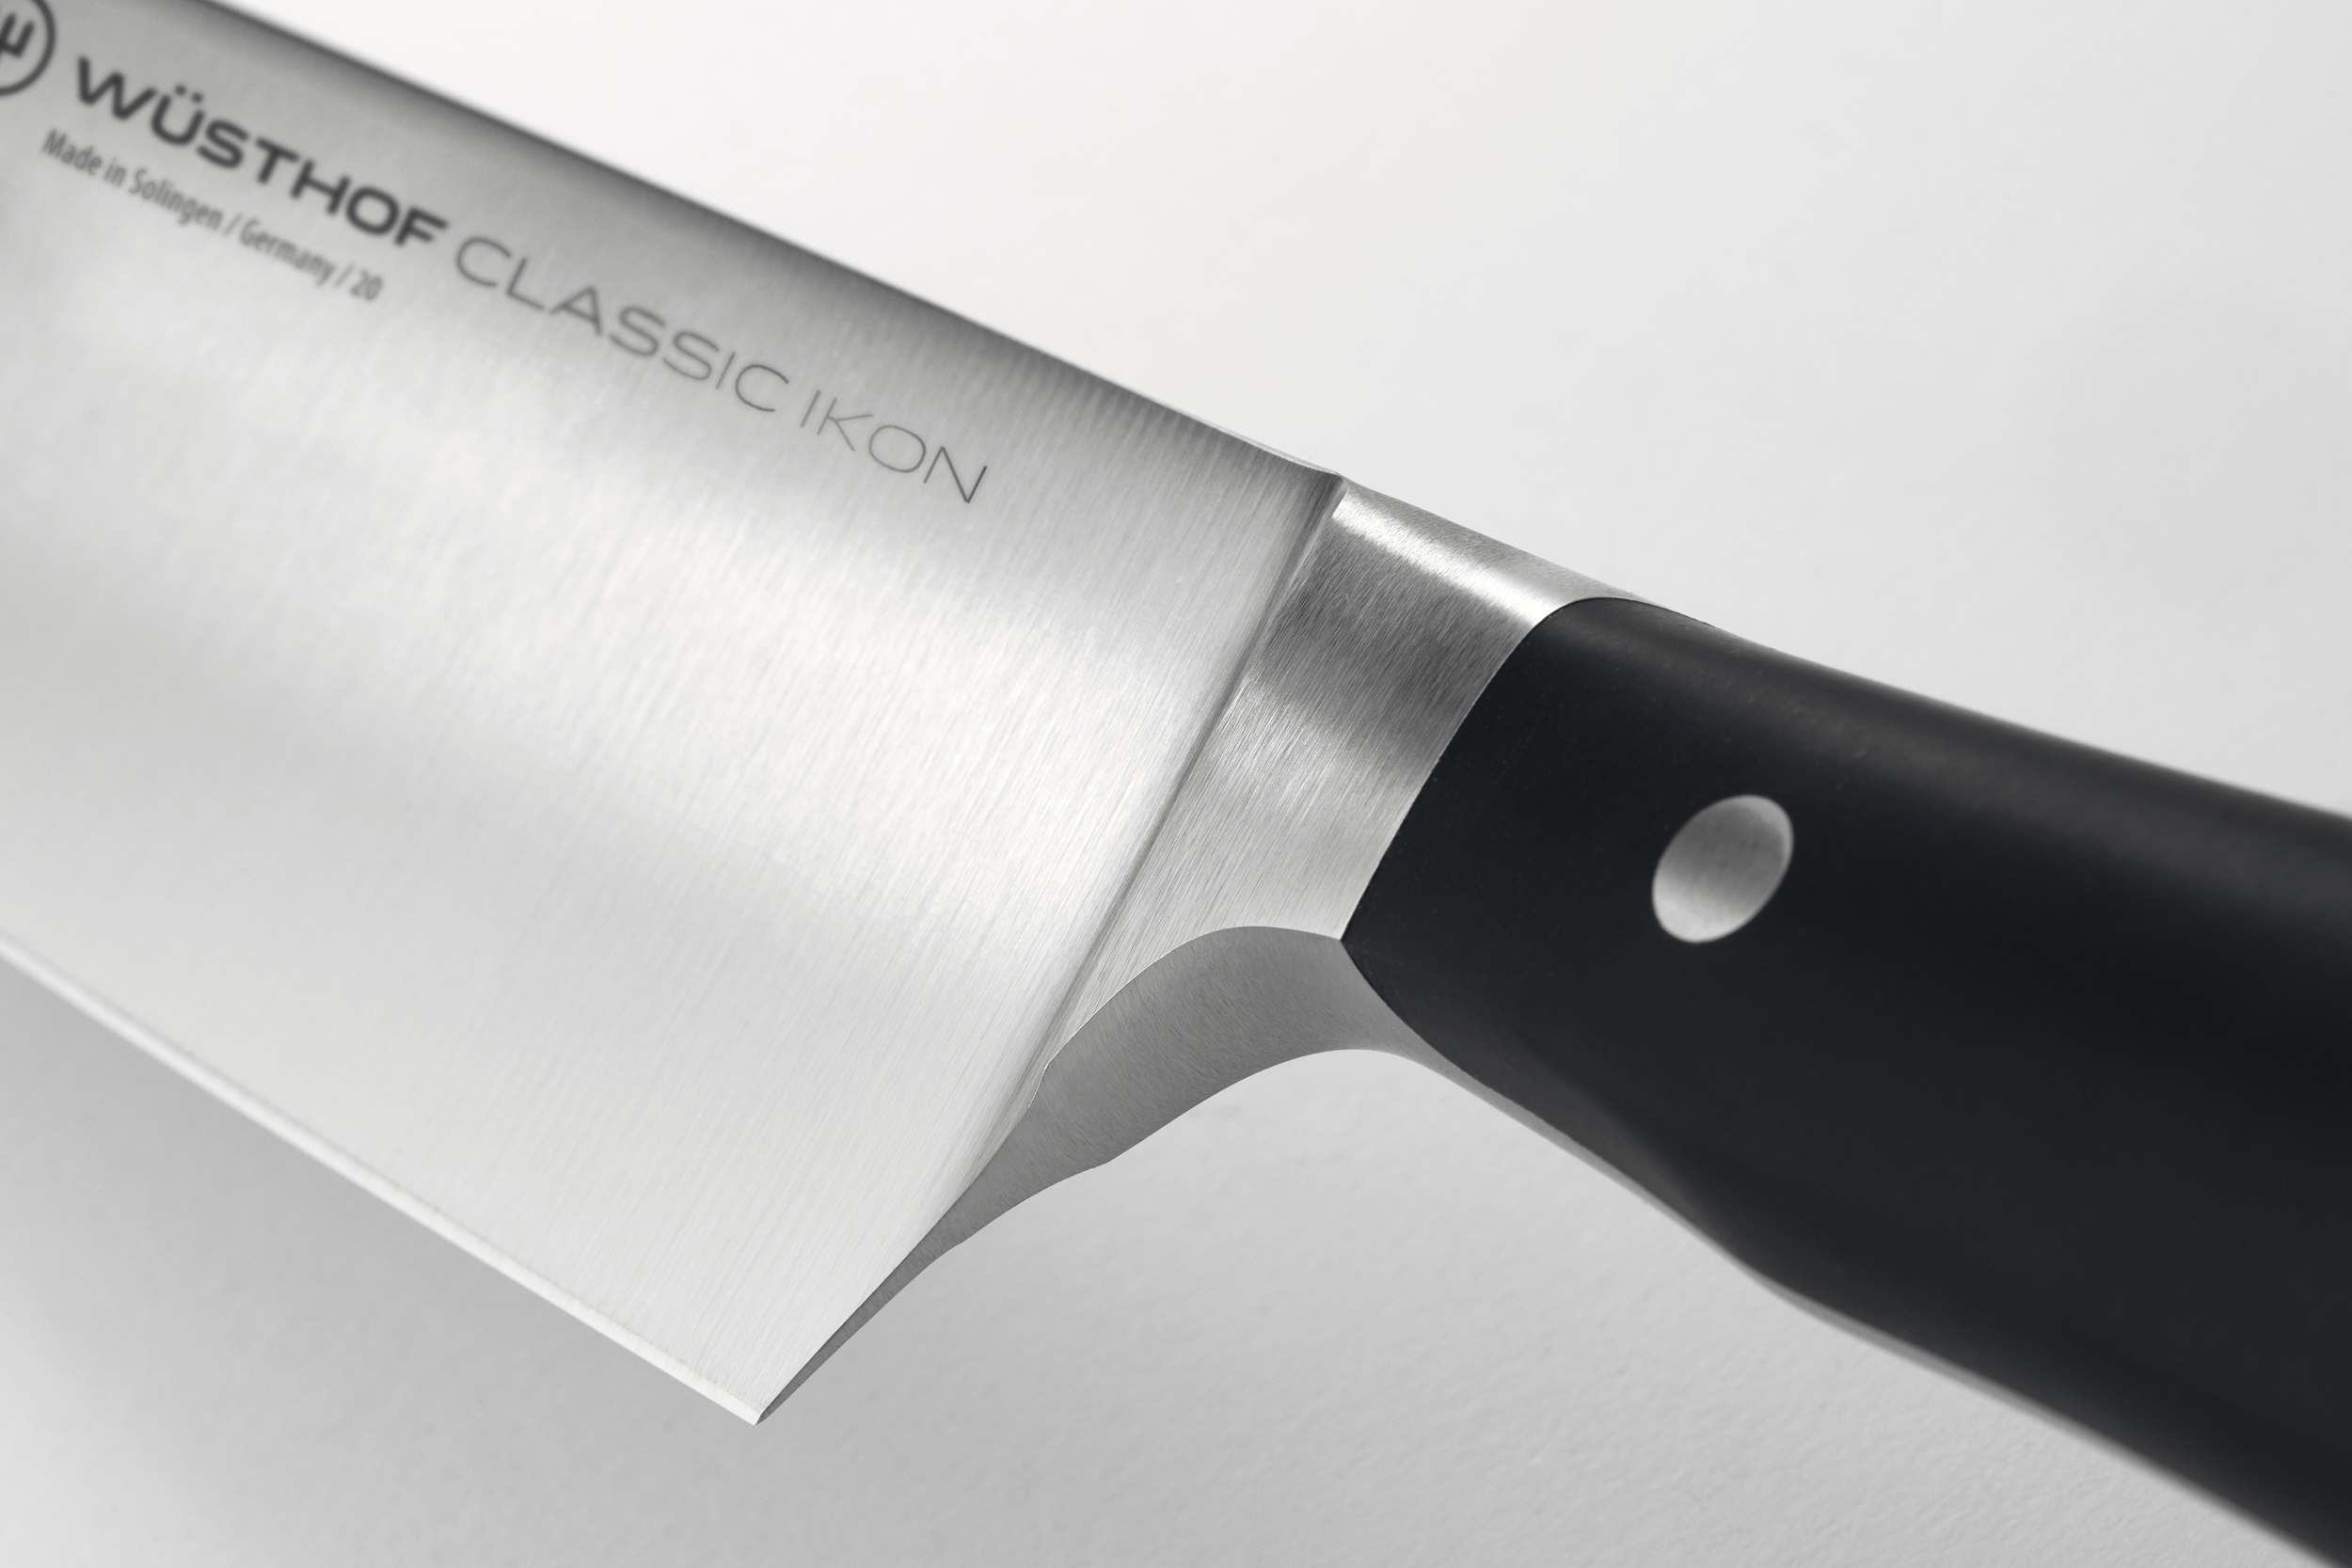 Wusthof Classic Ikon Black Chef's Knife 20cm 1040330120